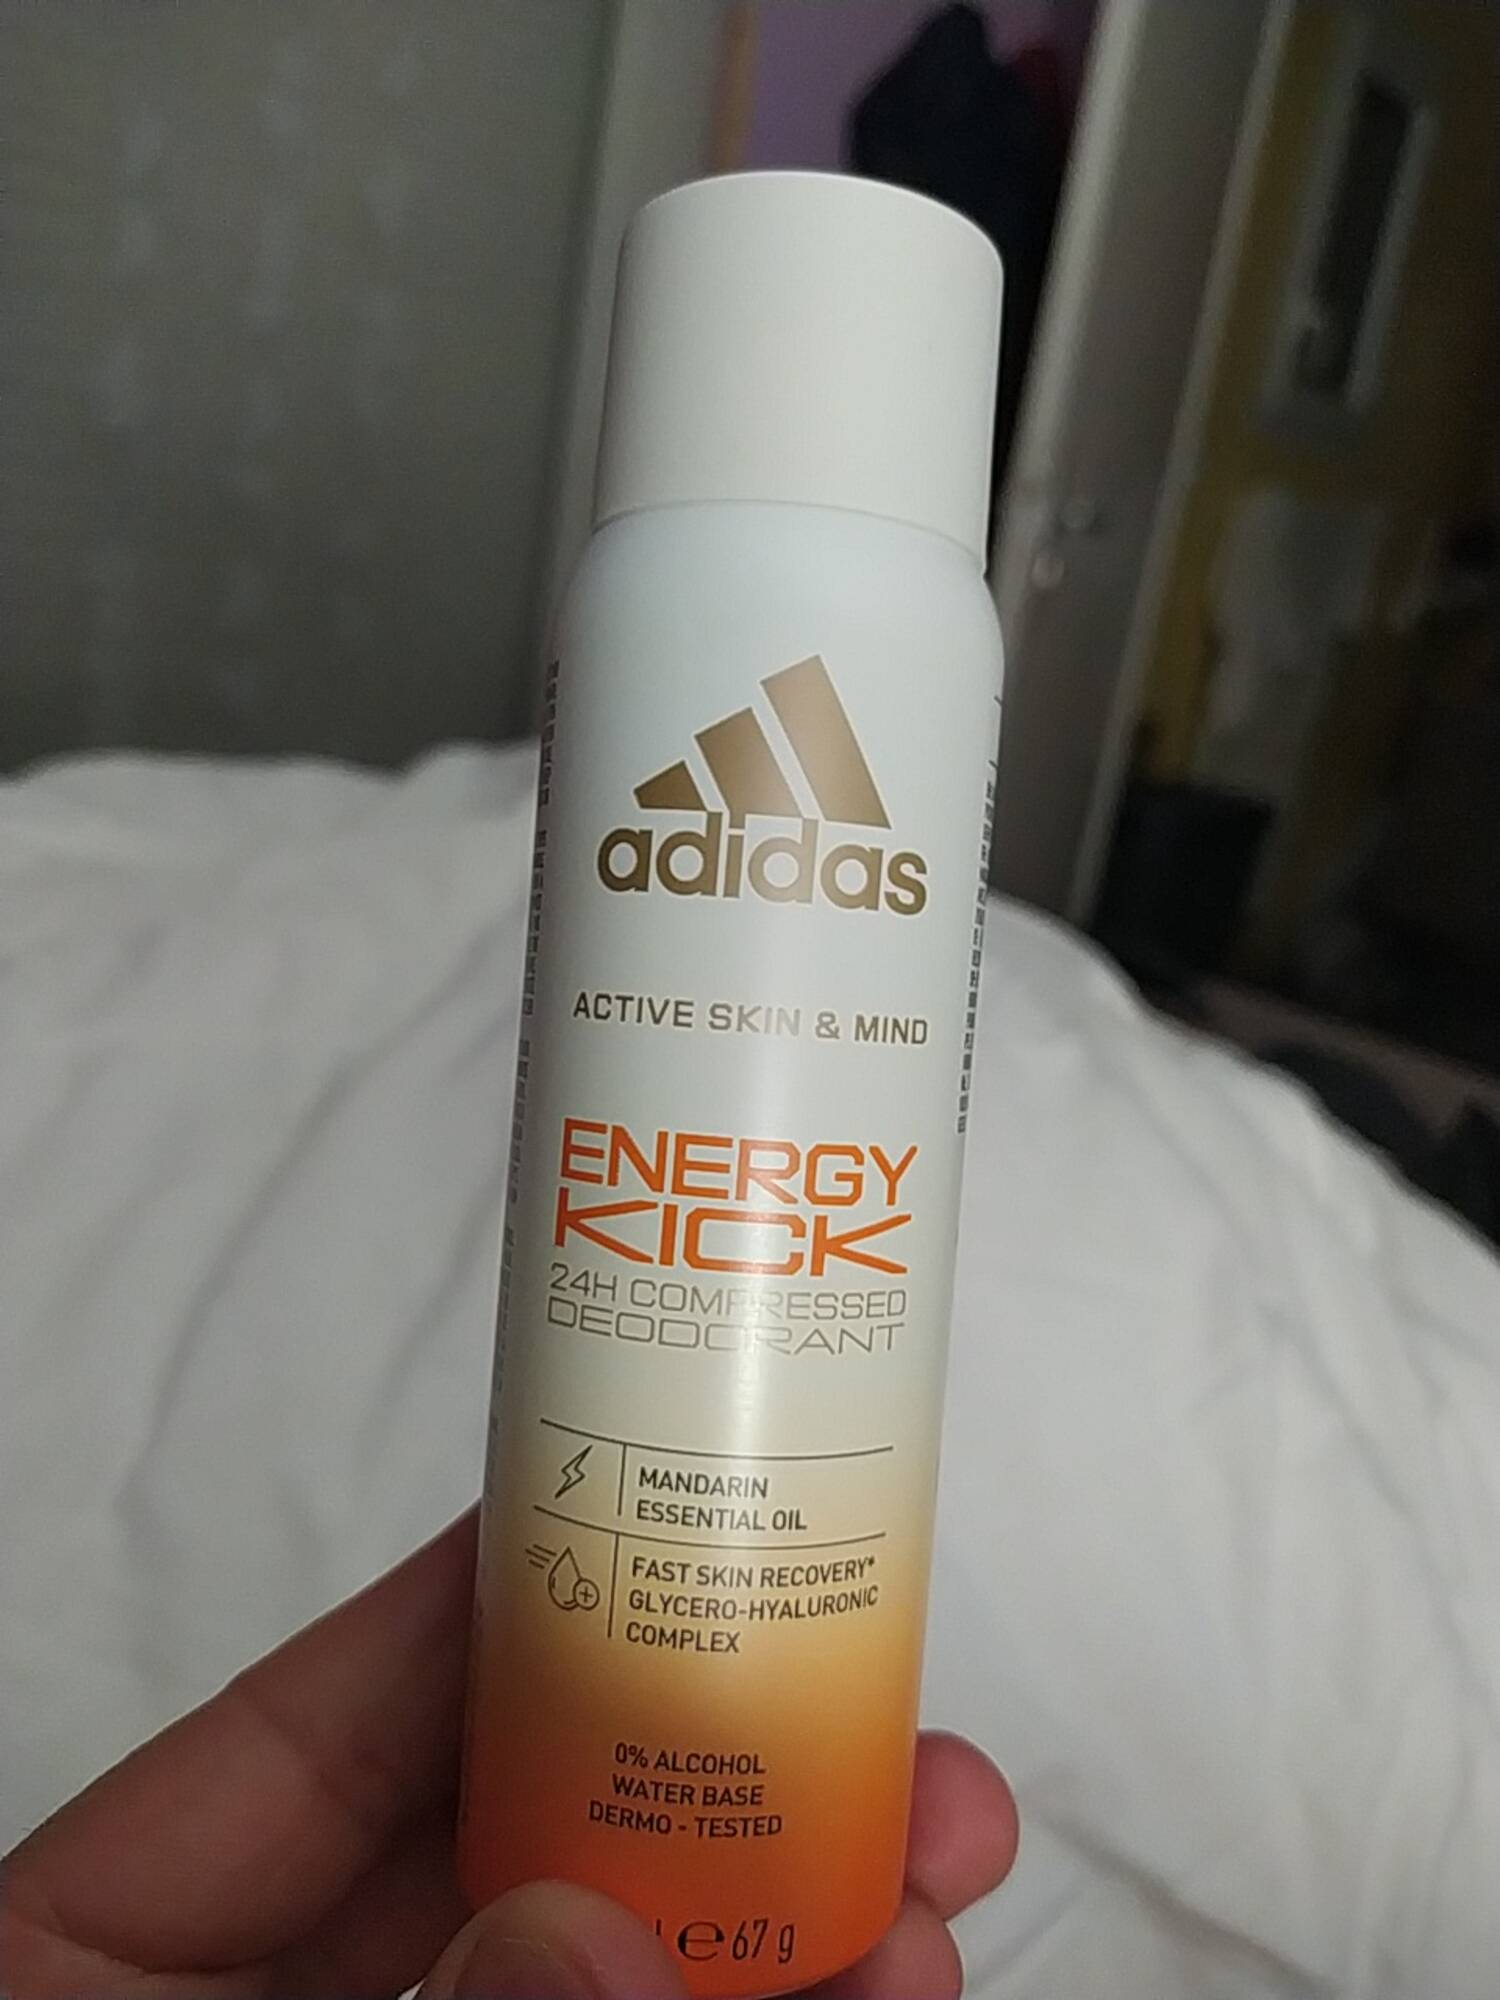 ADIDAS - Energy kick - 24h Compressed deodorant